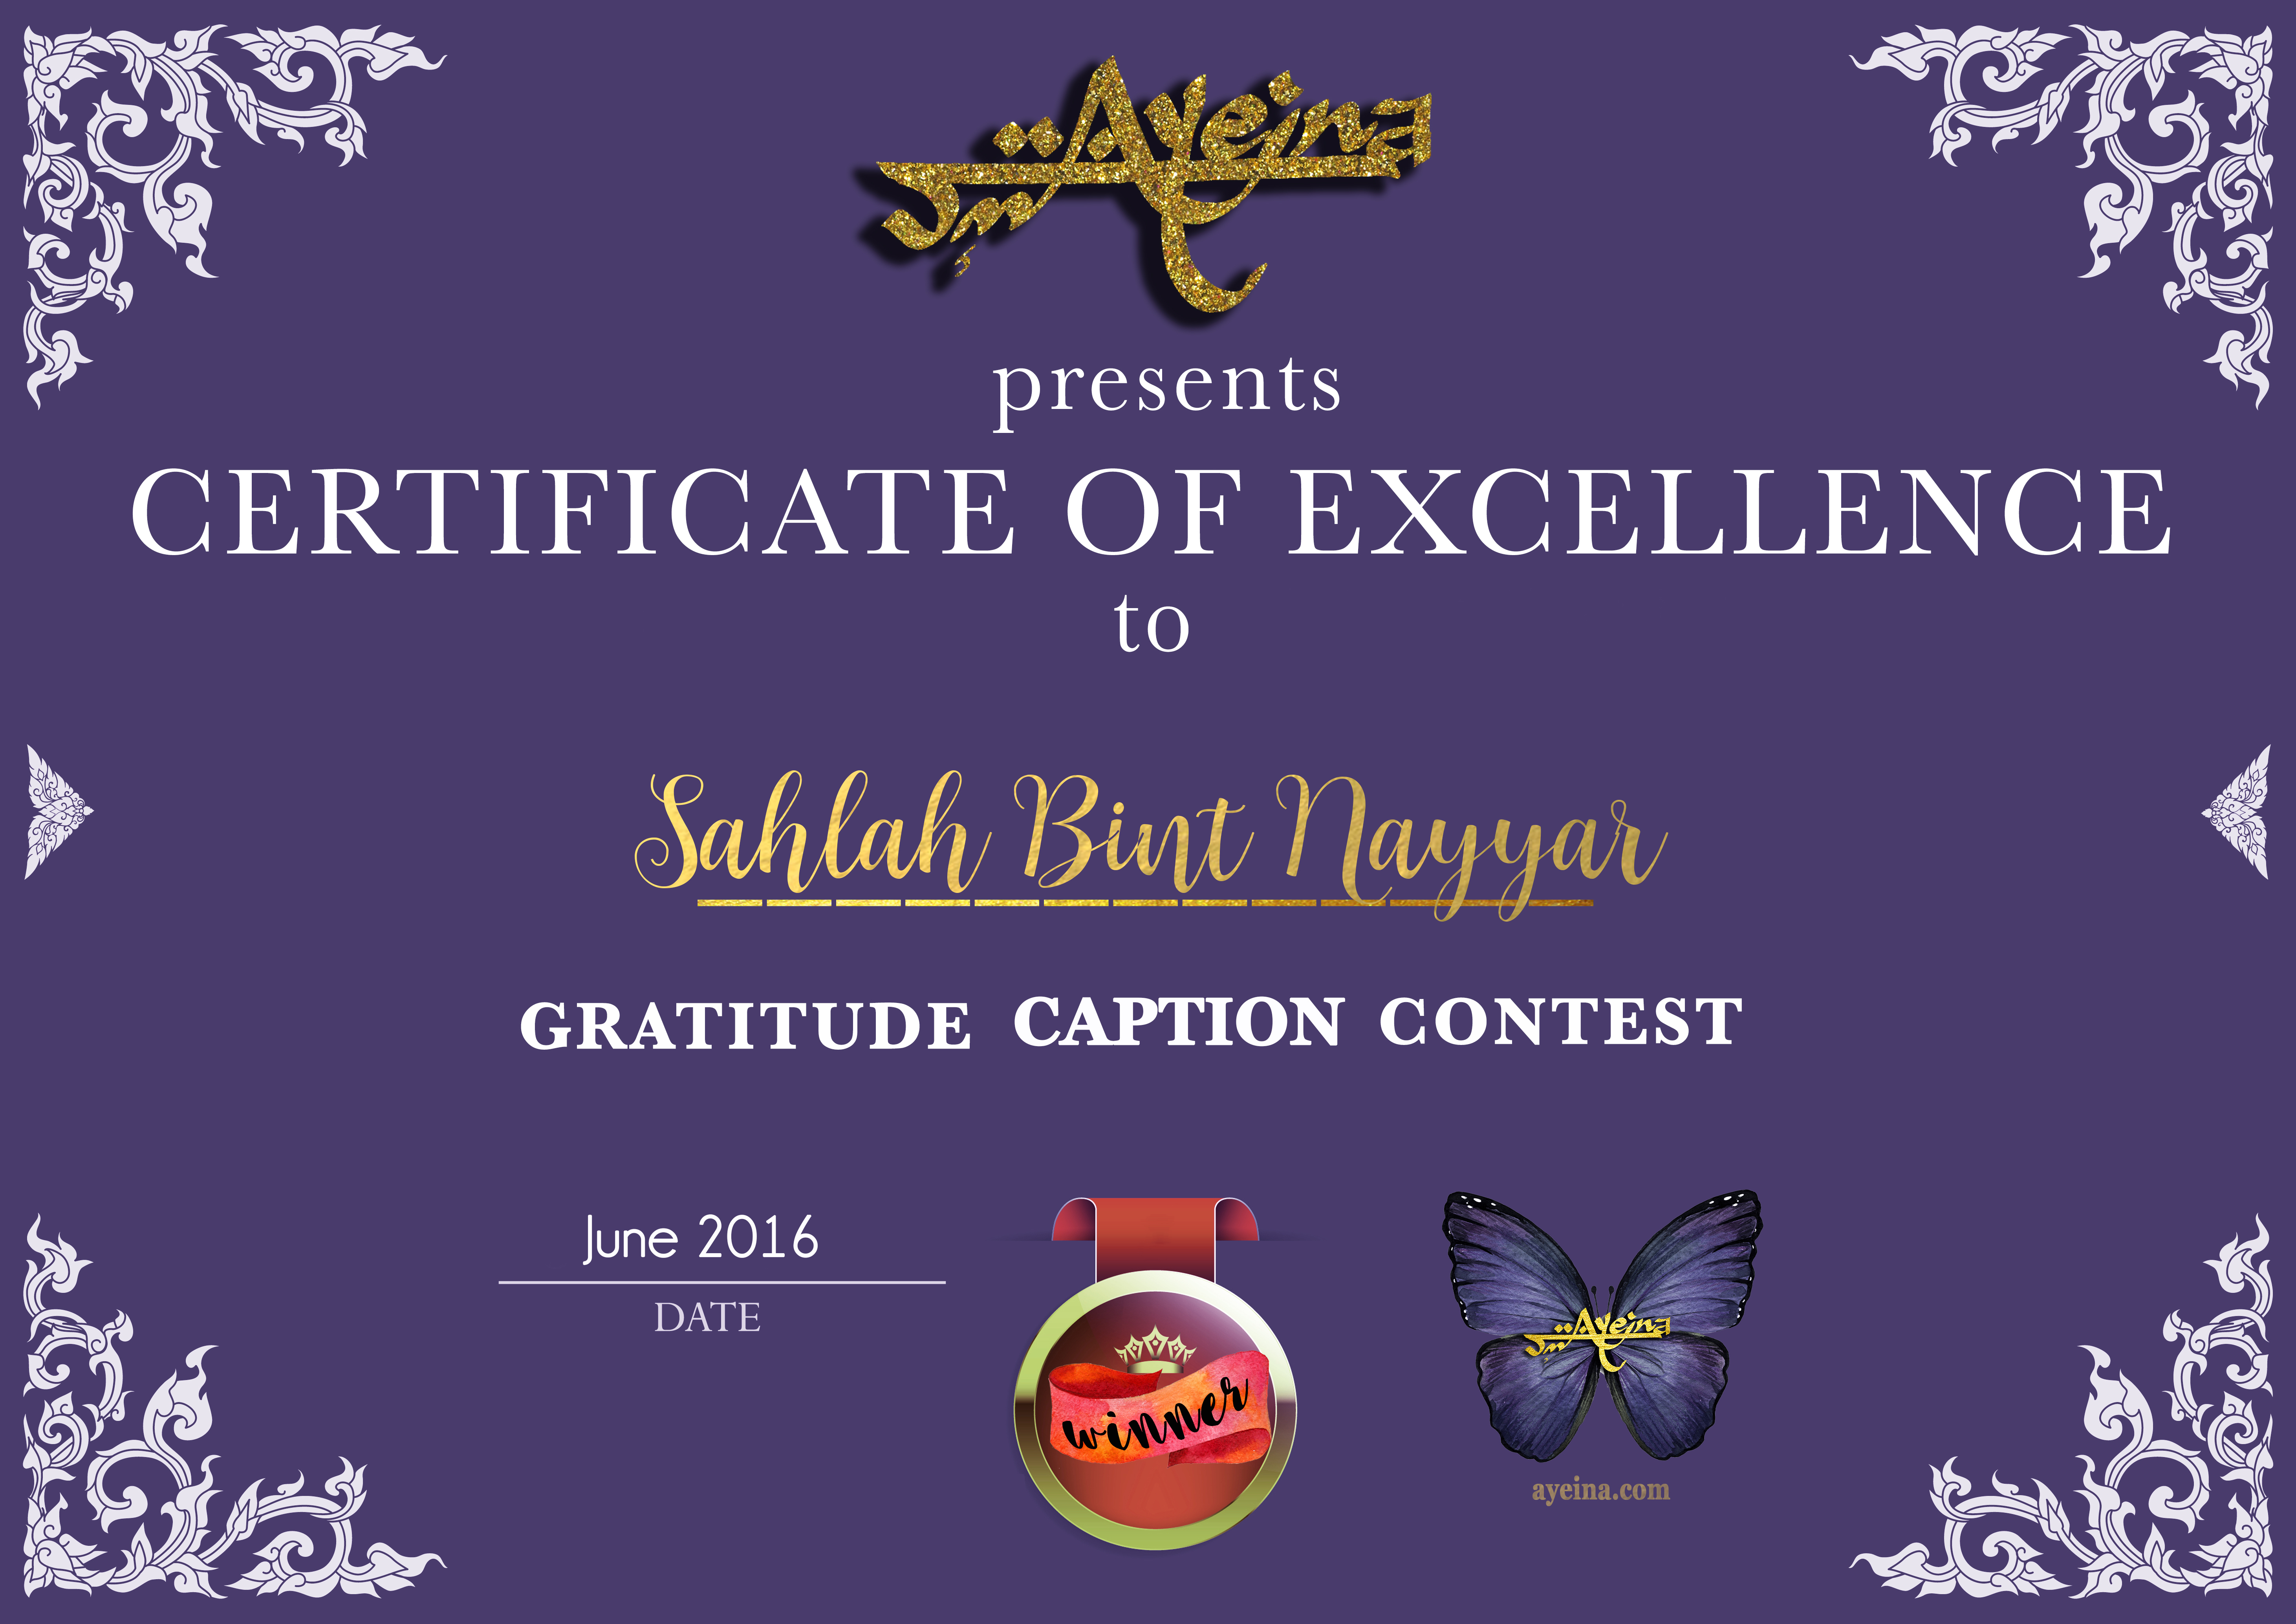 purple certificate gold ayeina butterfly logo winner #AlhamdulillahForSeries